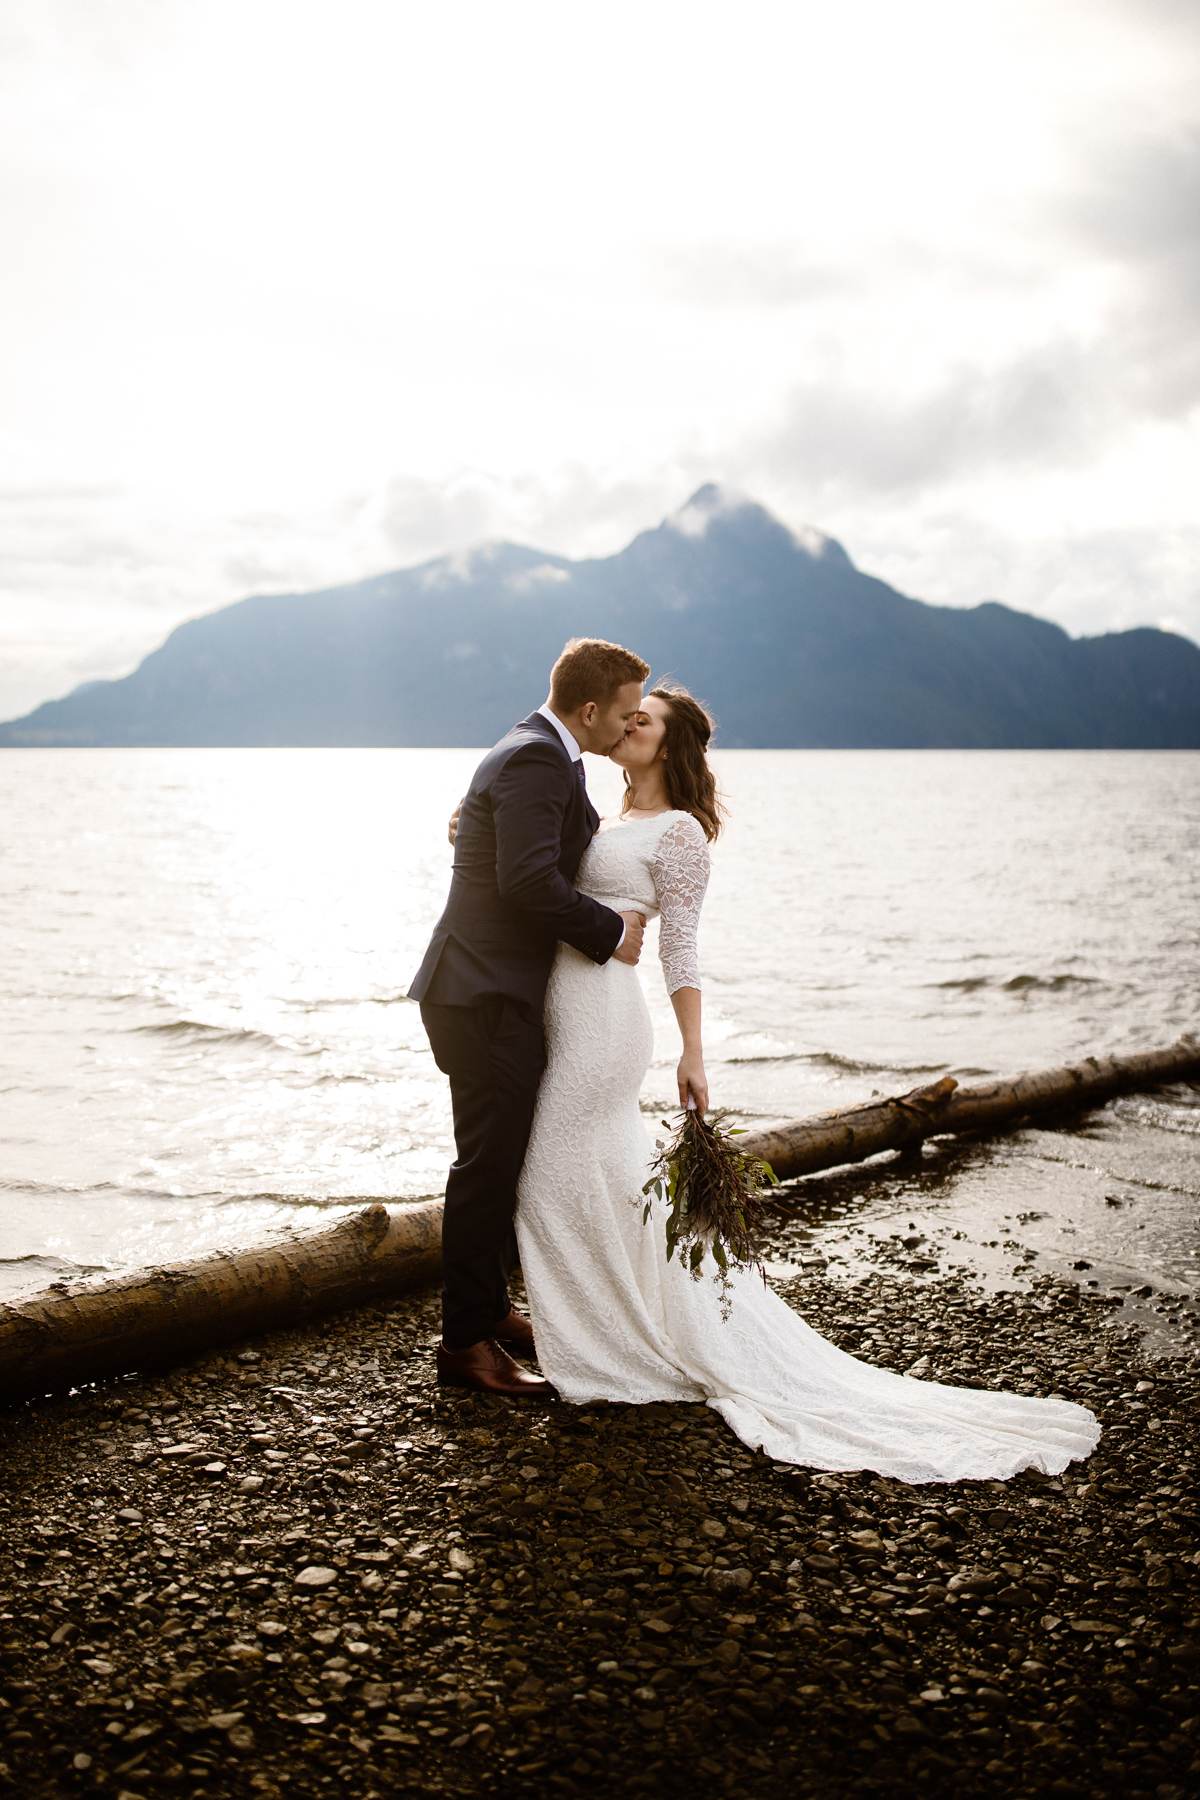 Squamish Wedding Photographers at an Adventurous Elopement - Image 24